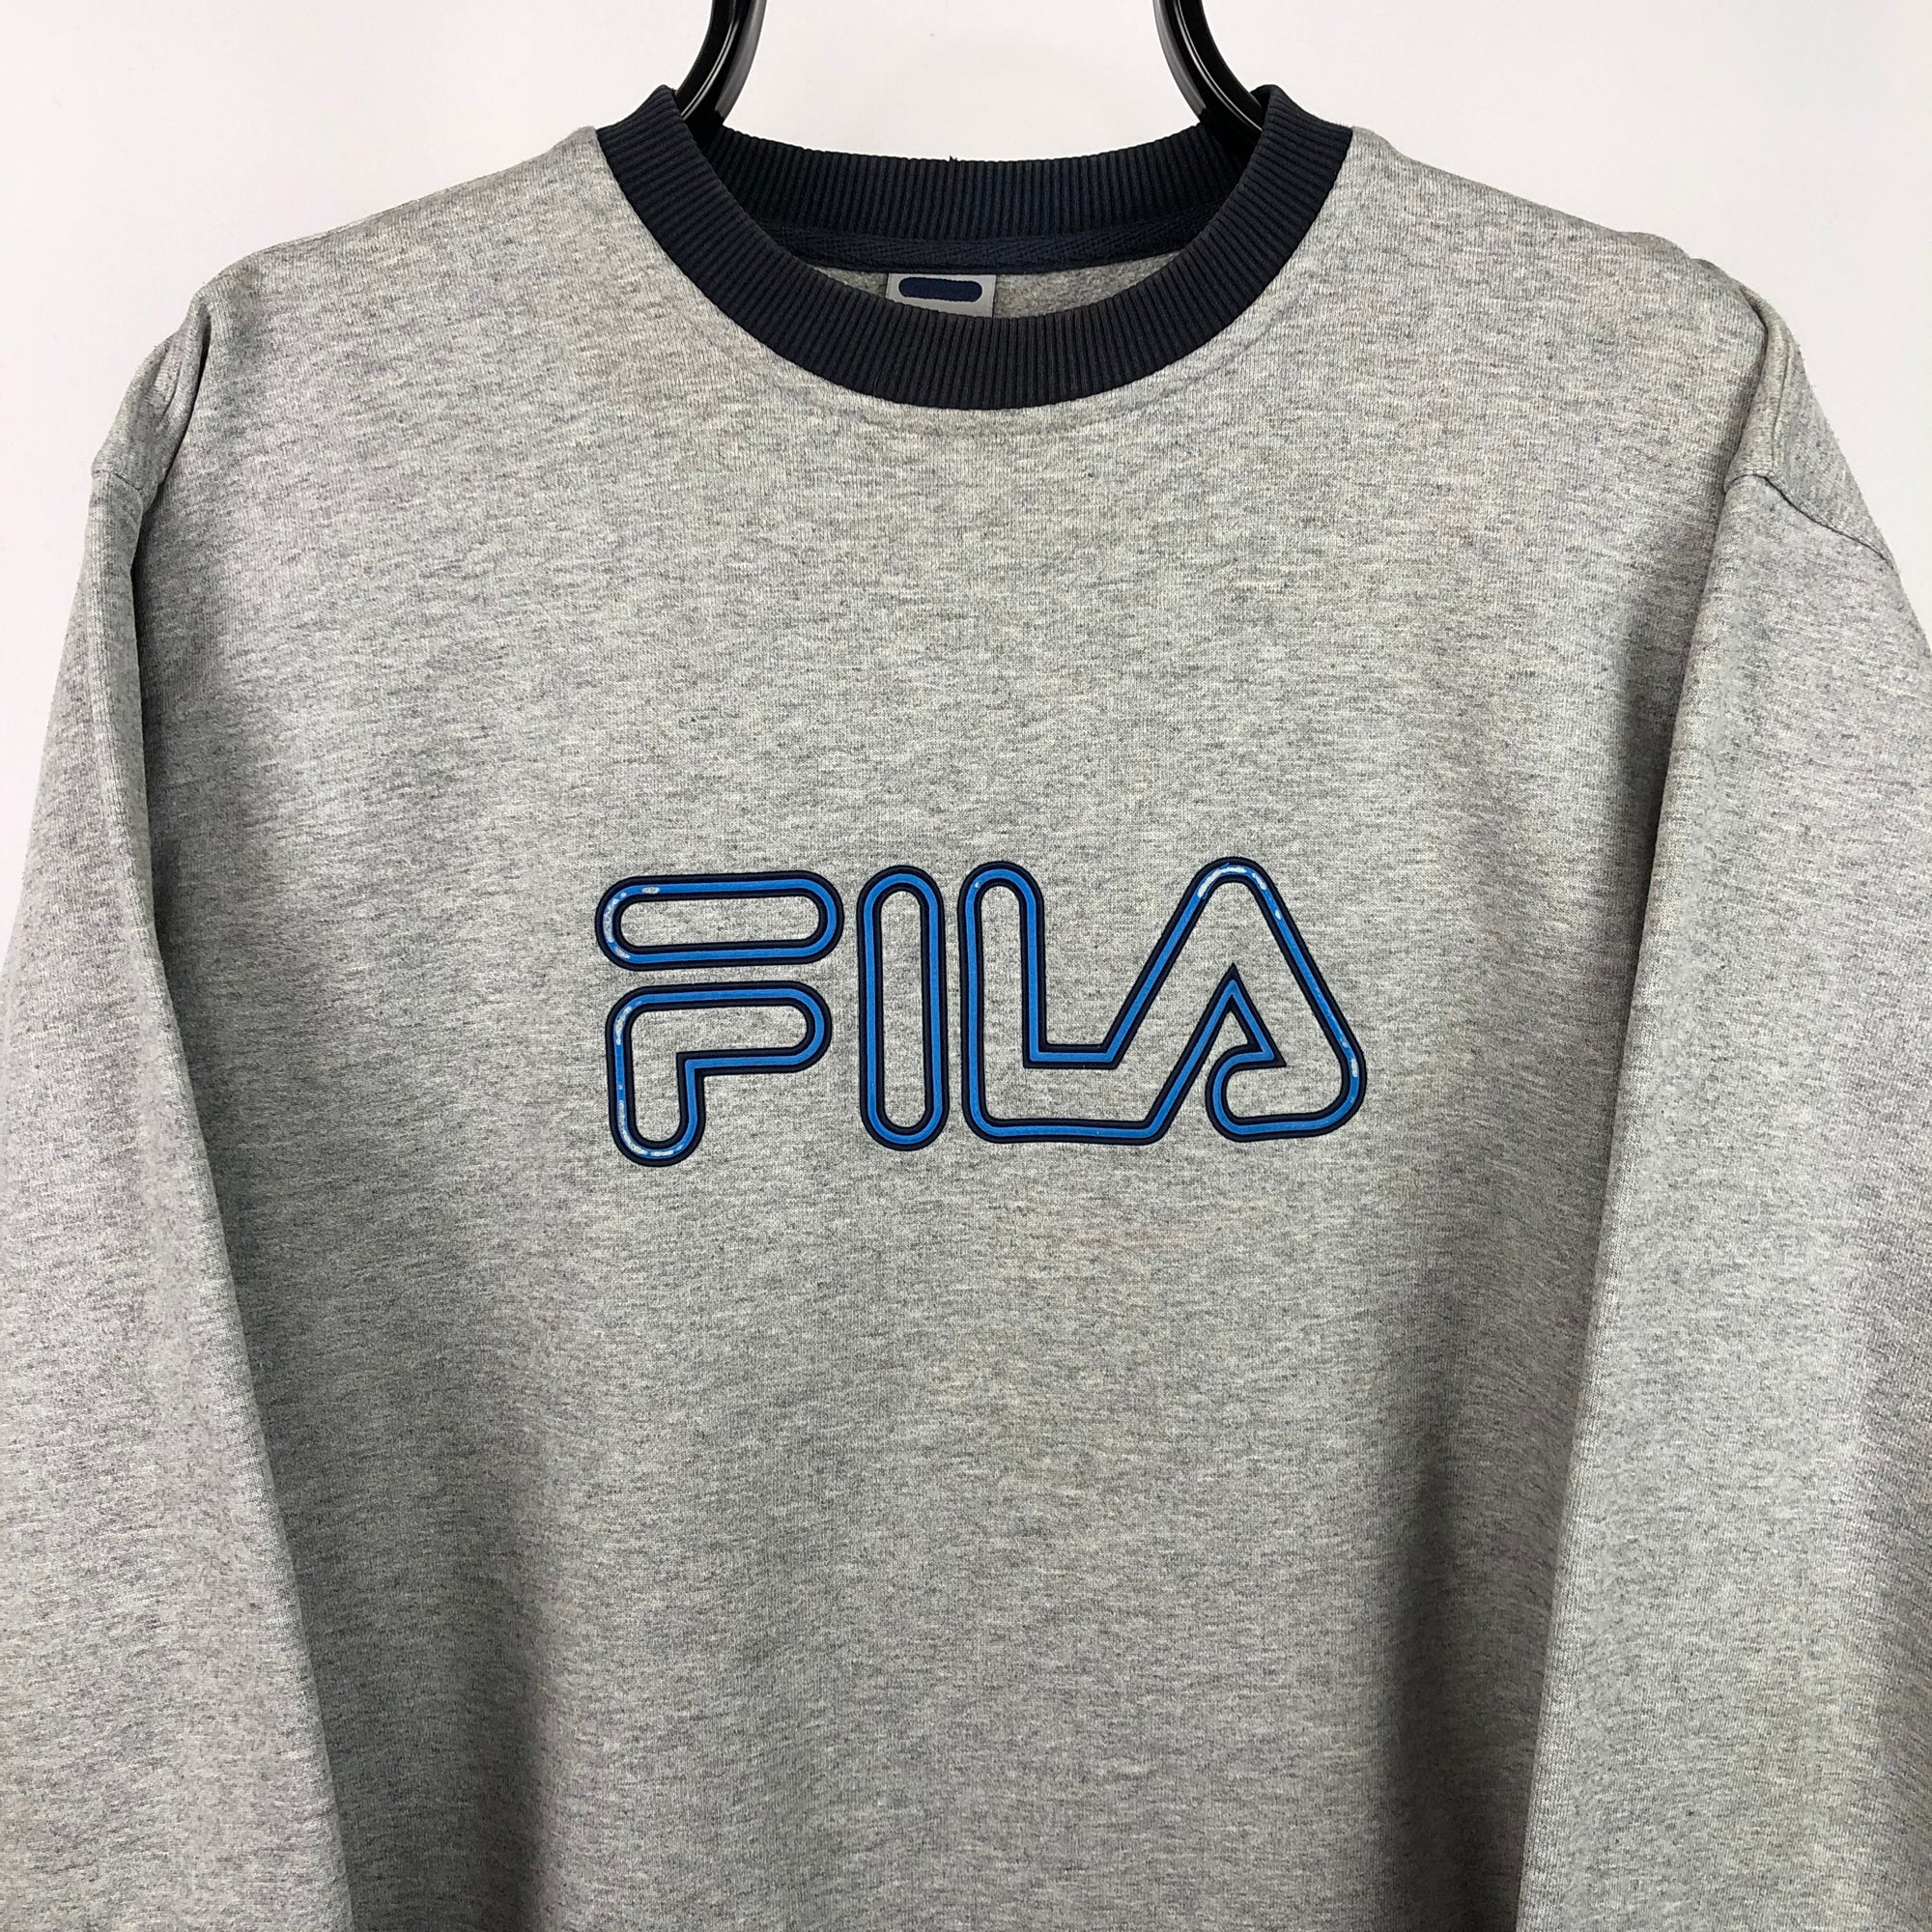 Vintage Fila Spellout Sweatshirt in Grey/Blue - Men's Small/Women's Medium